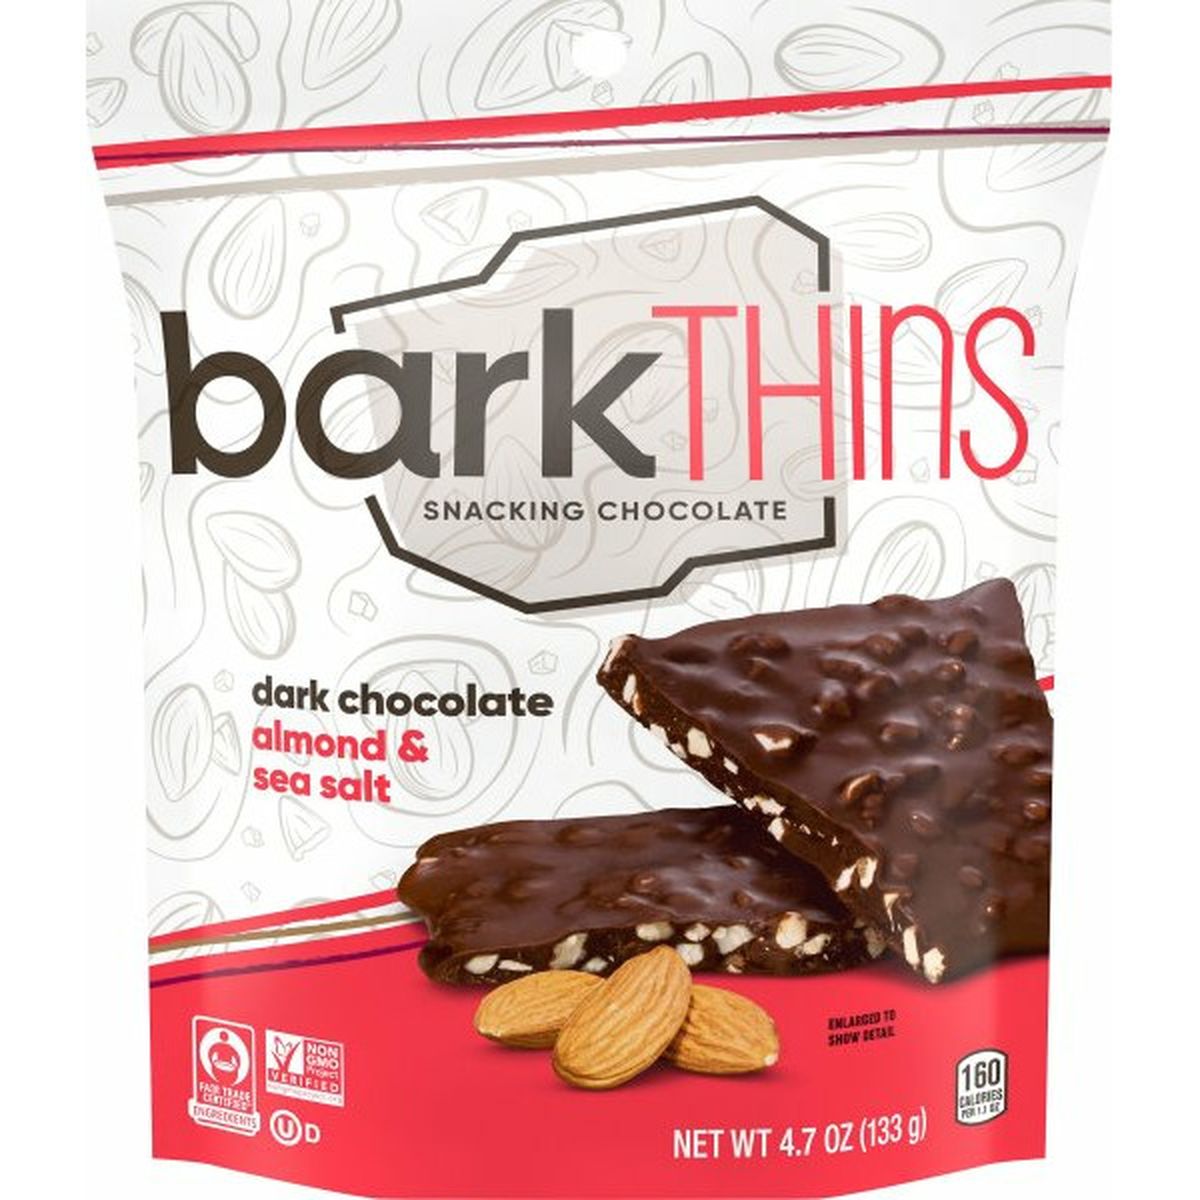 Calories in barkTHINS Snacking Chocolate, Dark Chocolate Almond & Sea Salt